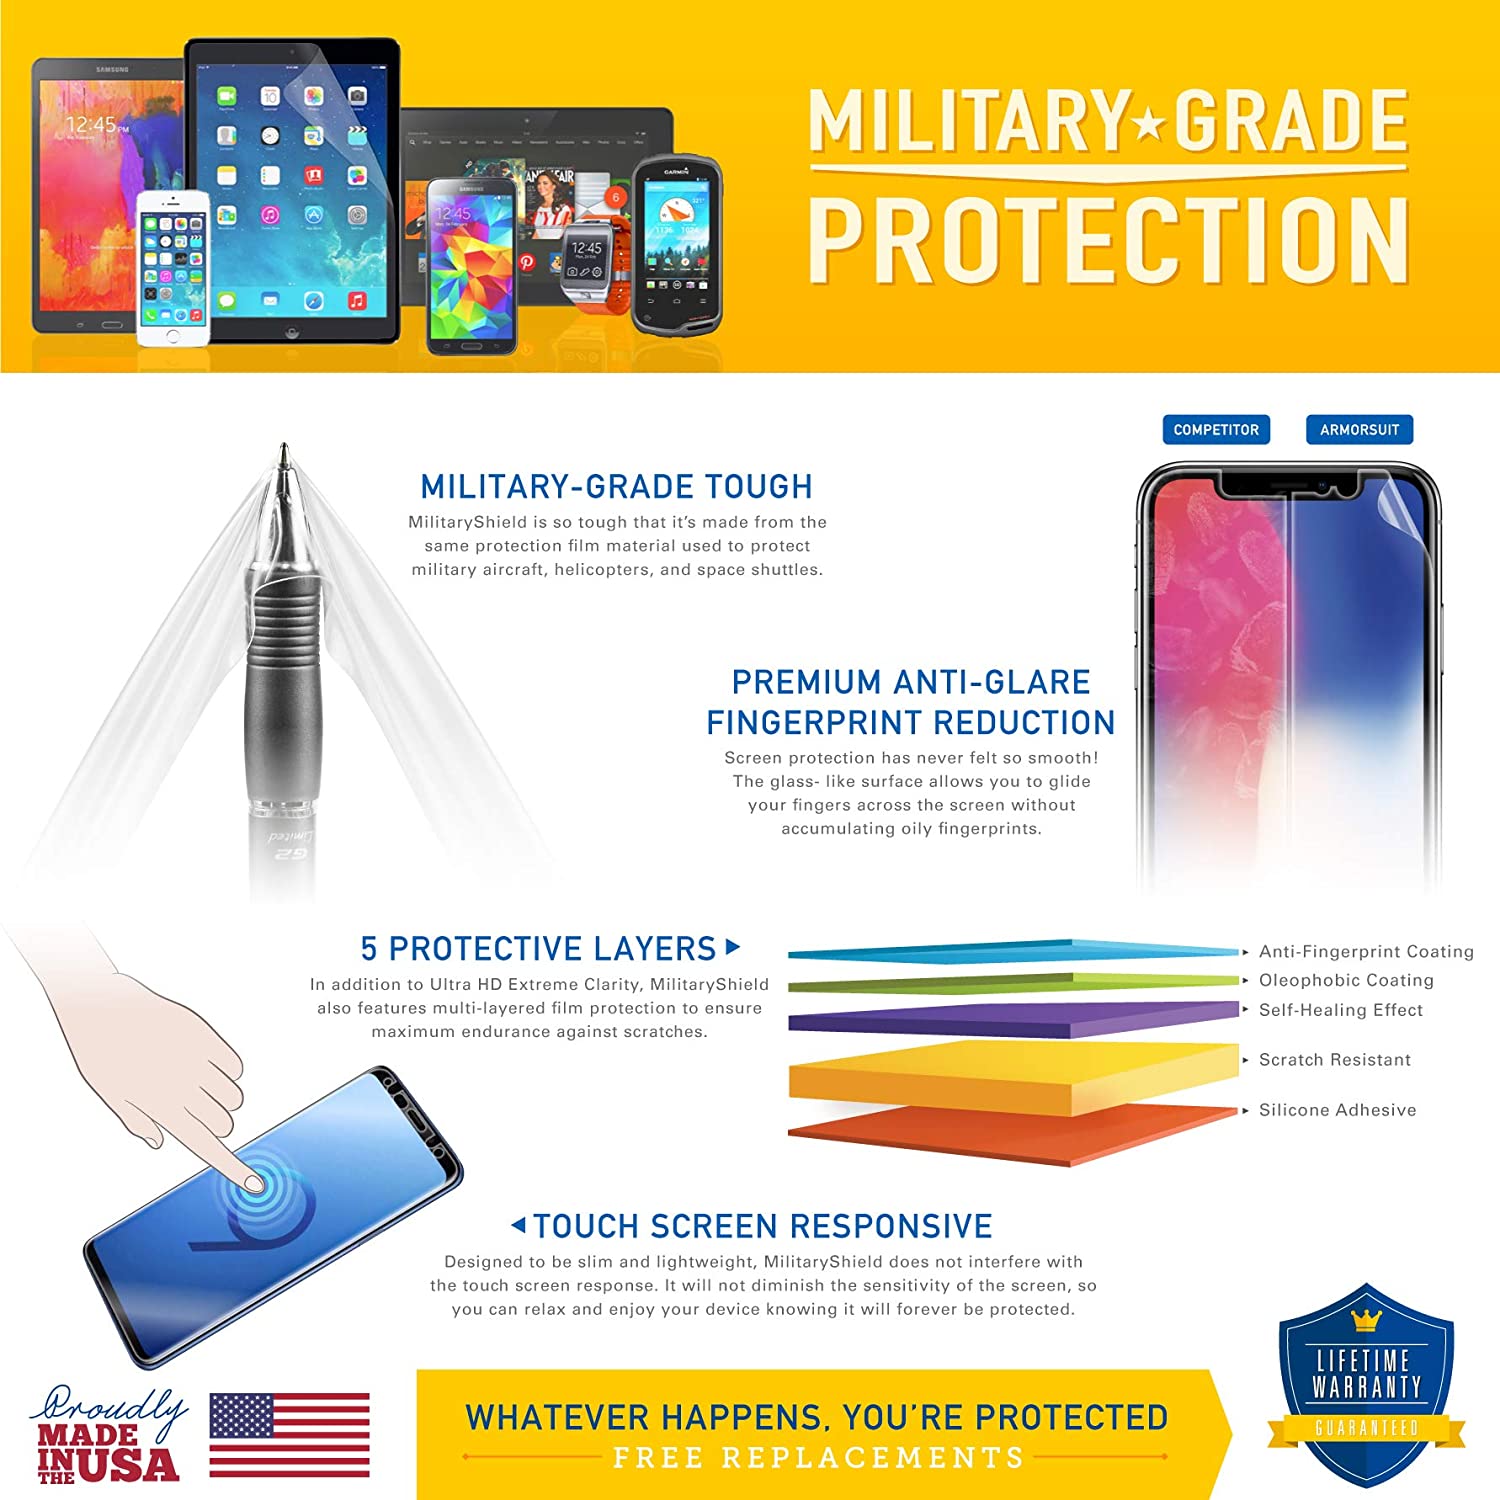 [2-Pack] Samsung Galaxy S5 Anti-Glare (Matte) Screen Protector